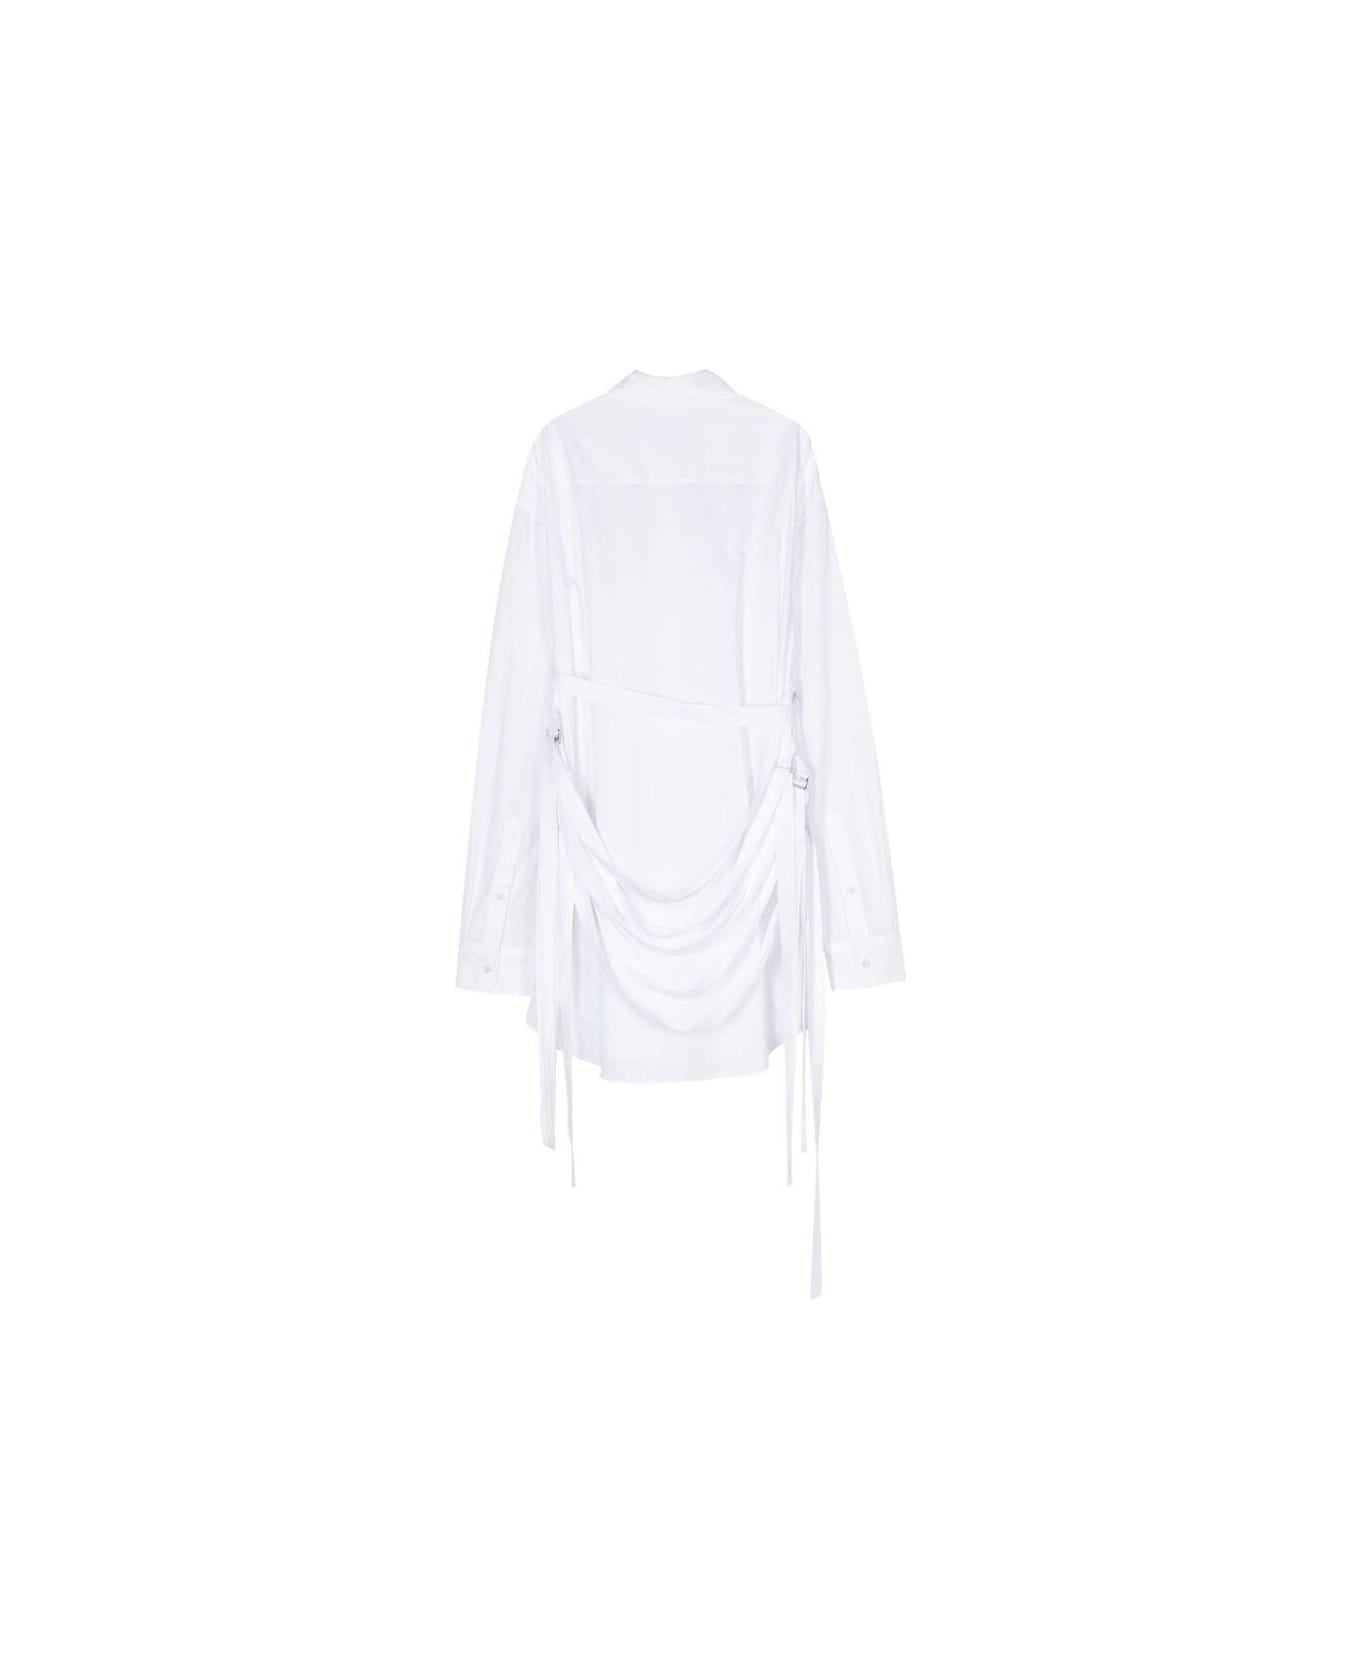 Ann Demeulemeester Buttoned Shirt - WHITE シャツ